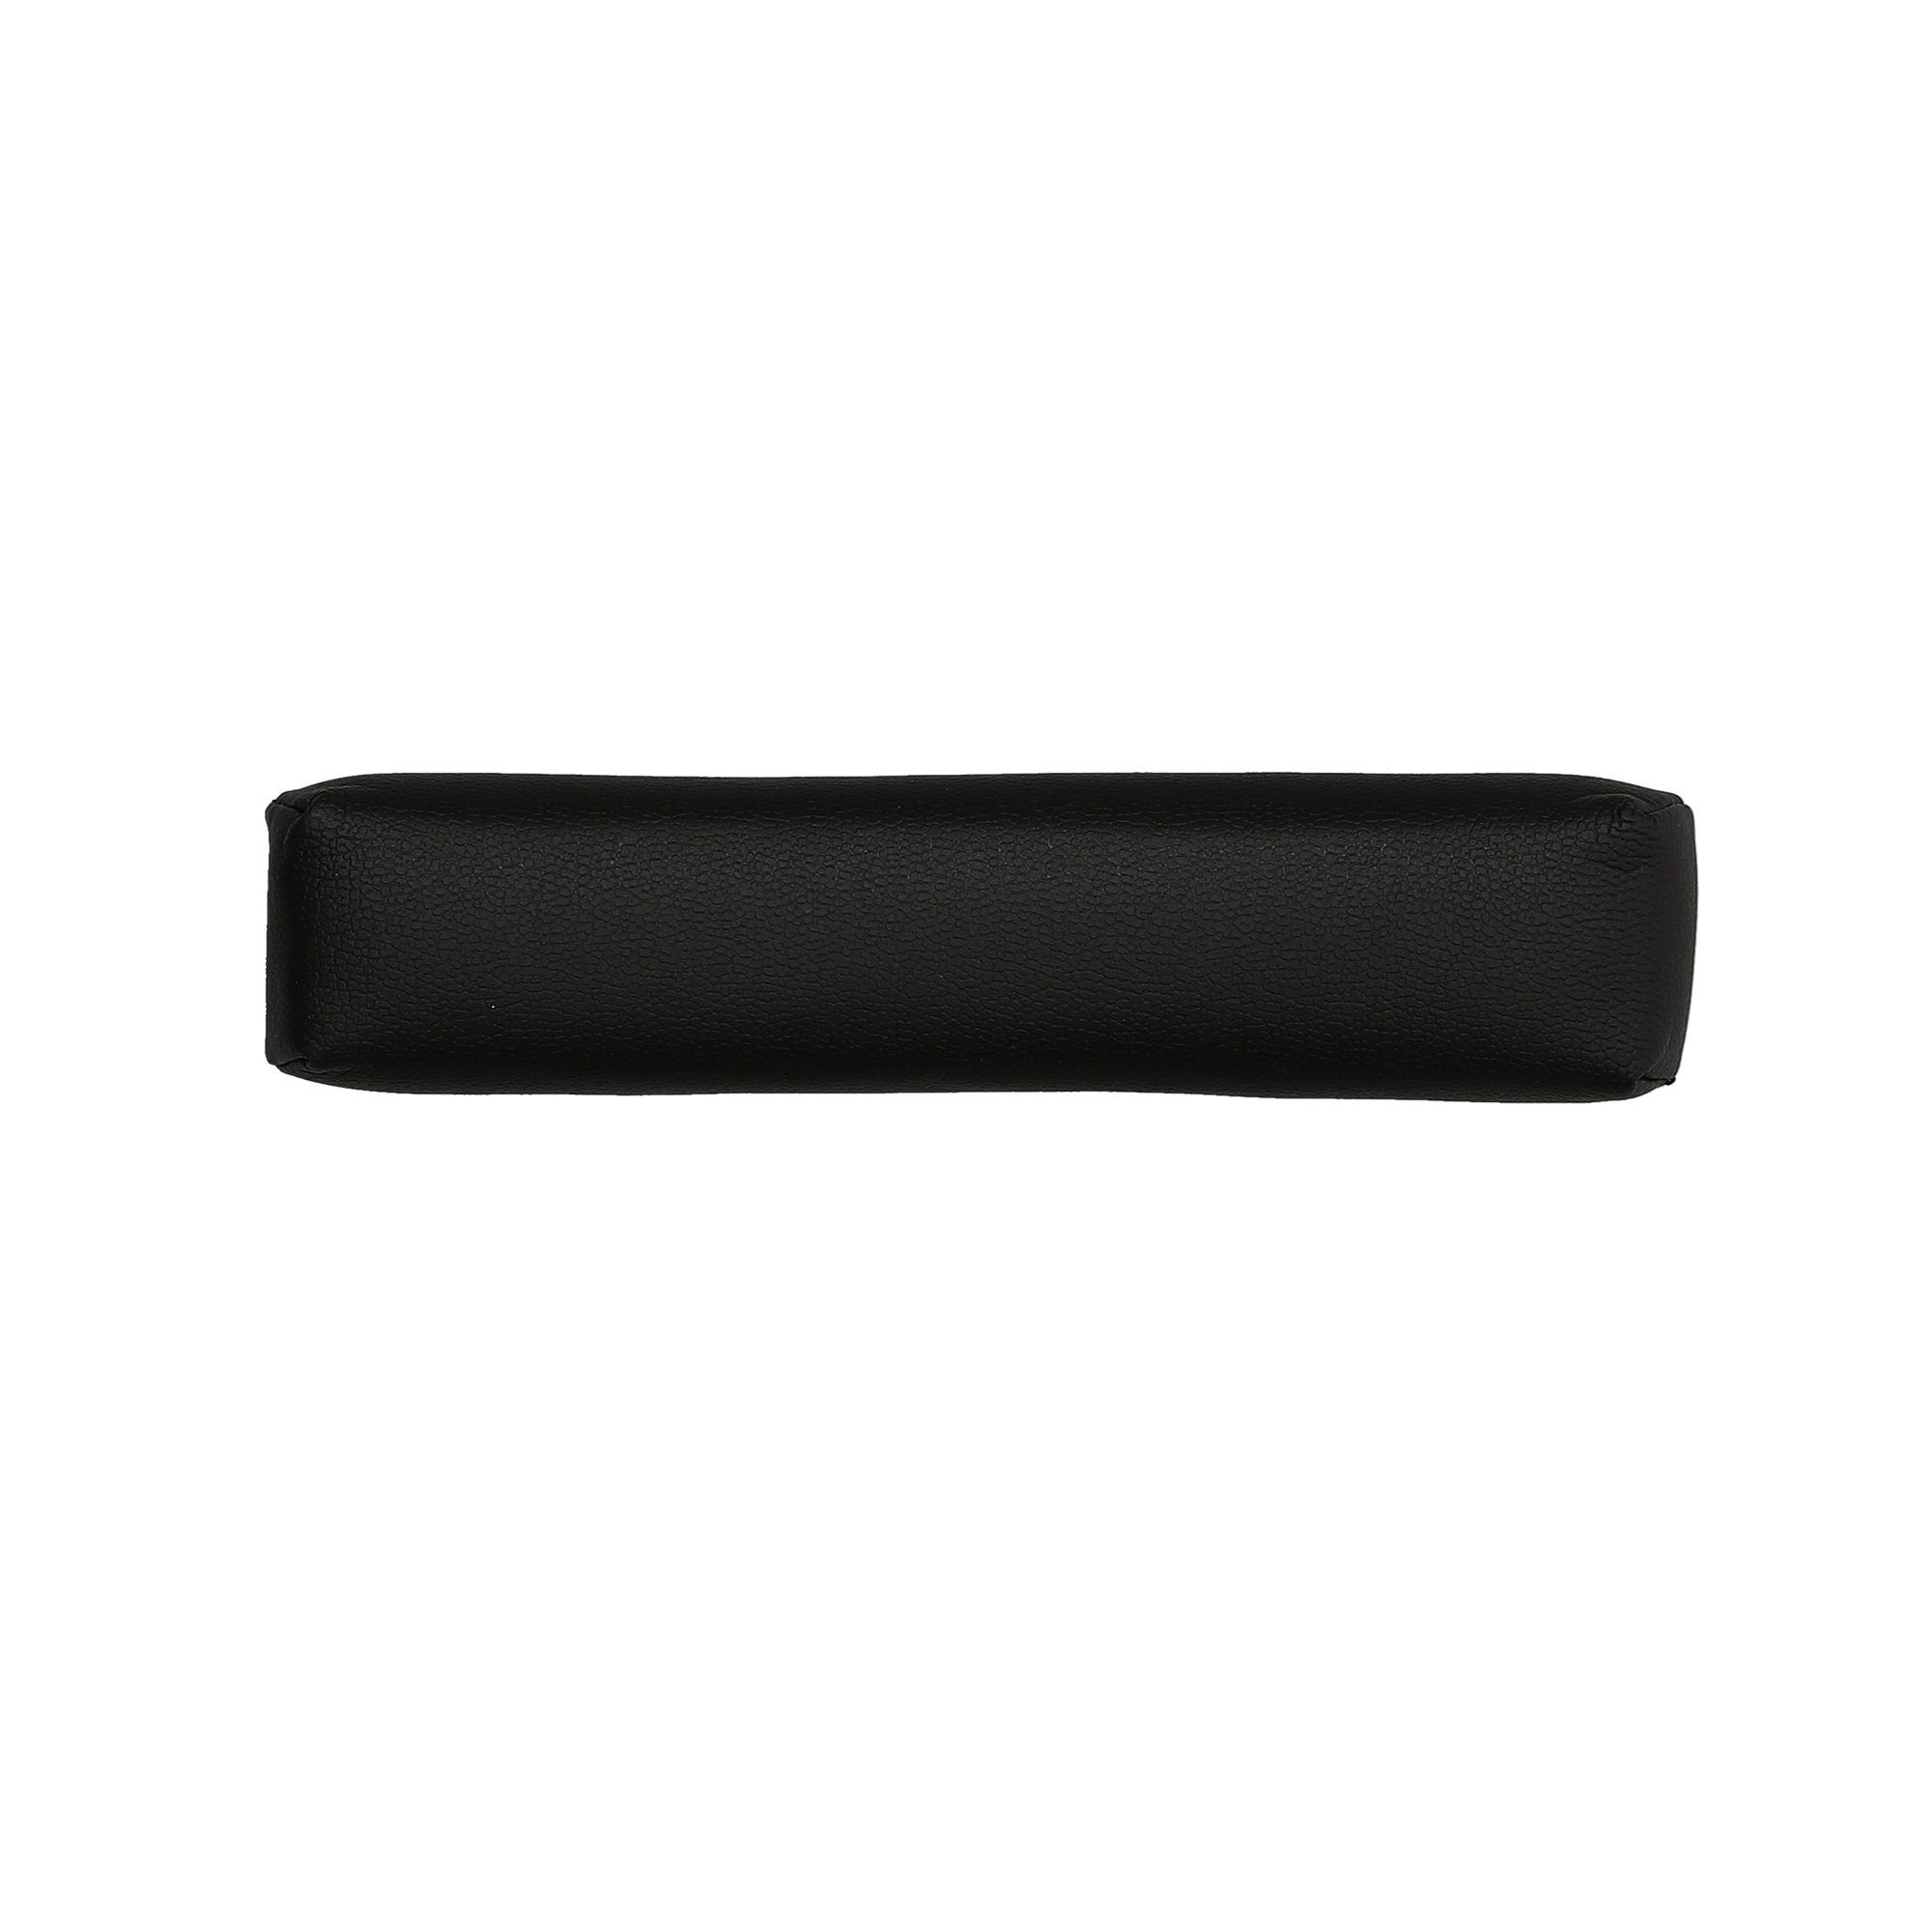 kwmobile Bügelpolster Bügelpolster für Audio Technica ATH-M70x, Kunstleder Kopfbügel Polster für Overear Headphones | Bezüge